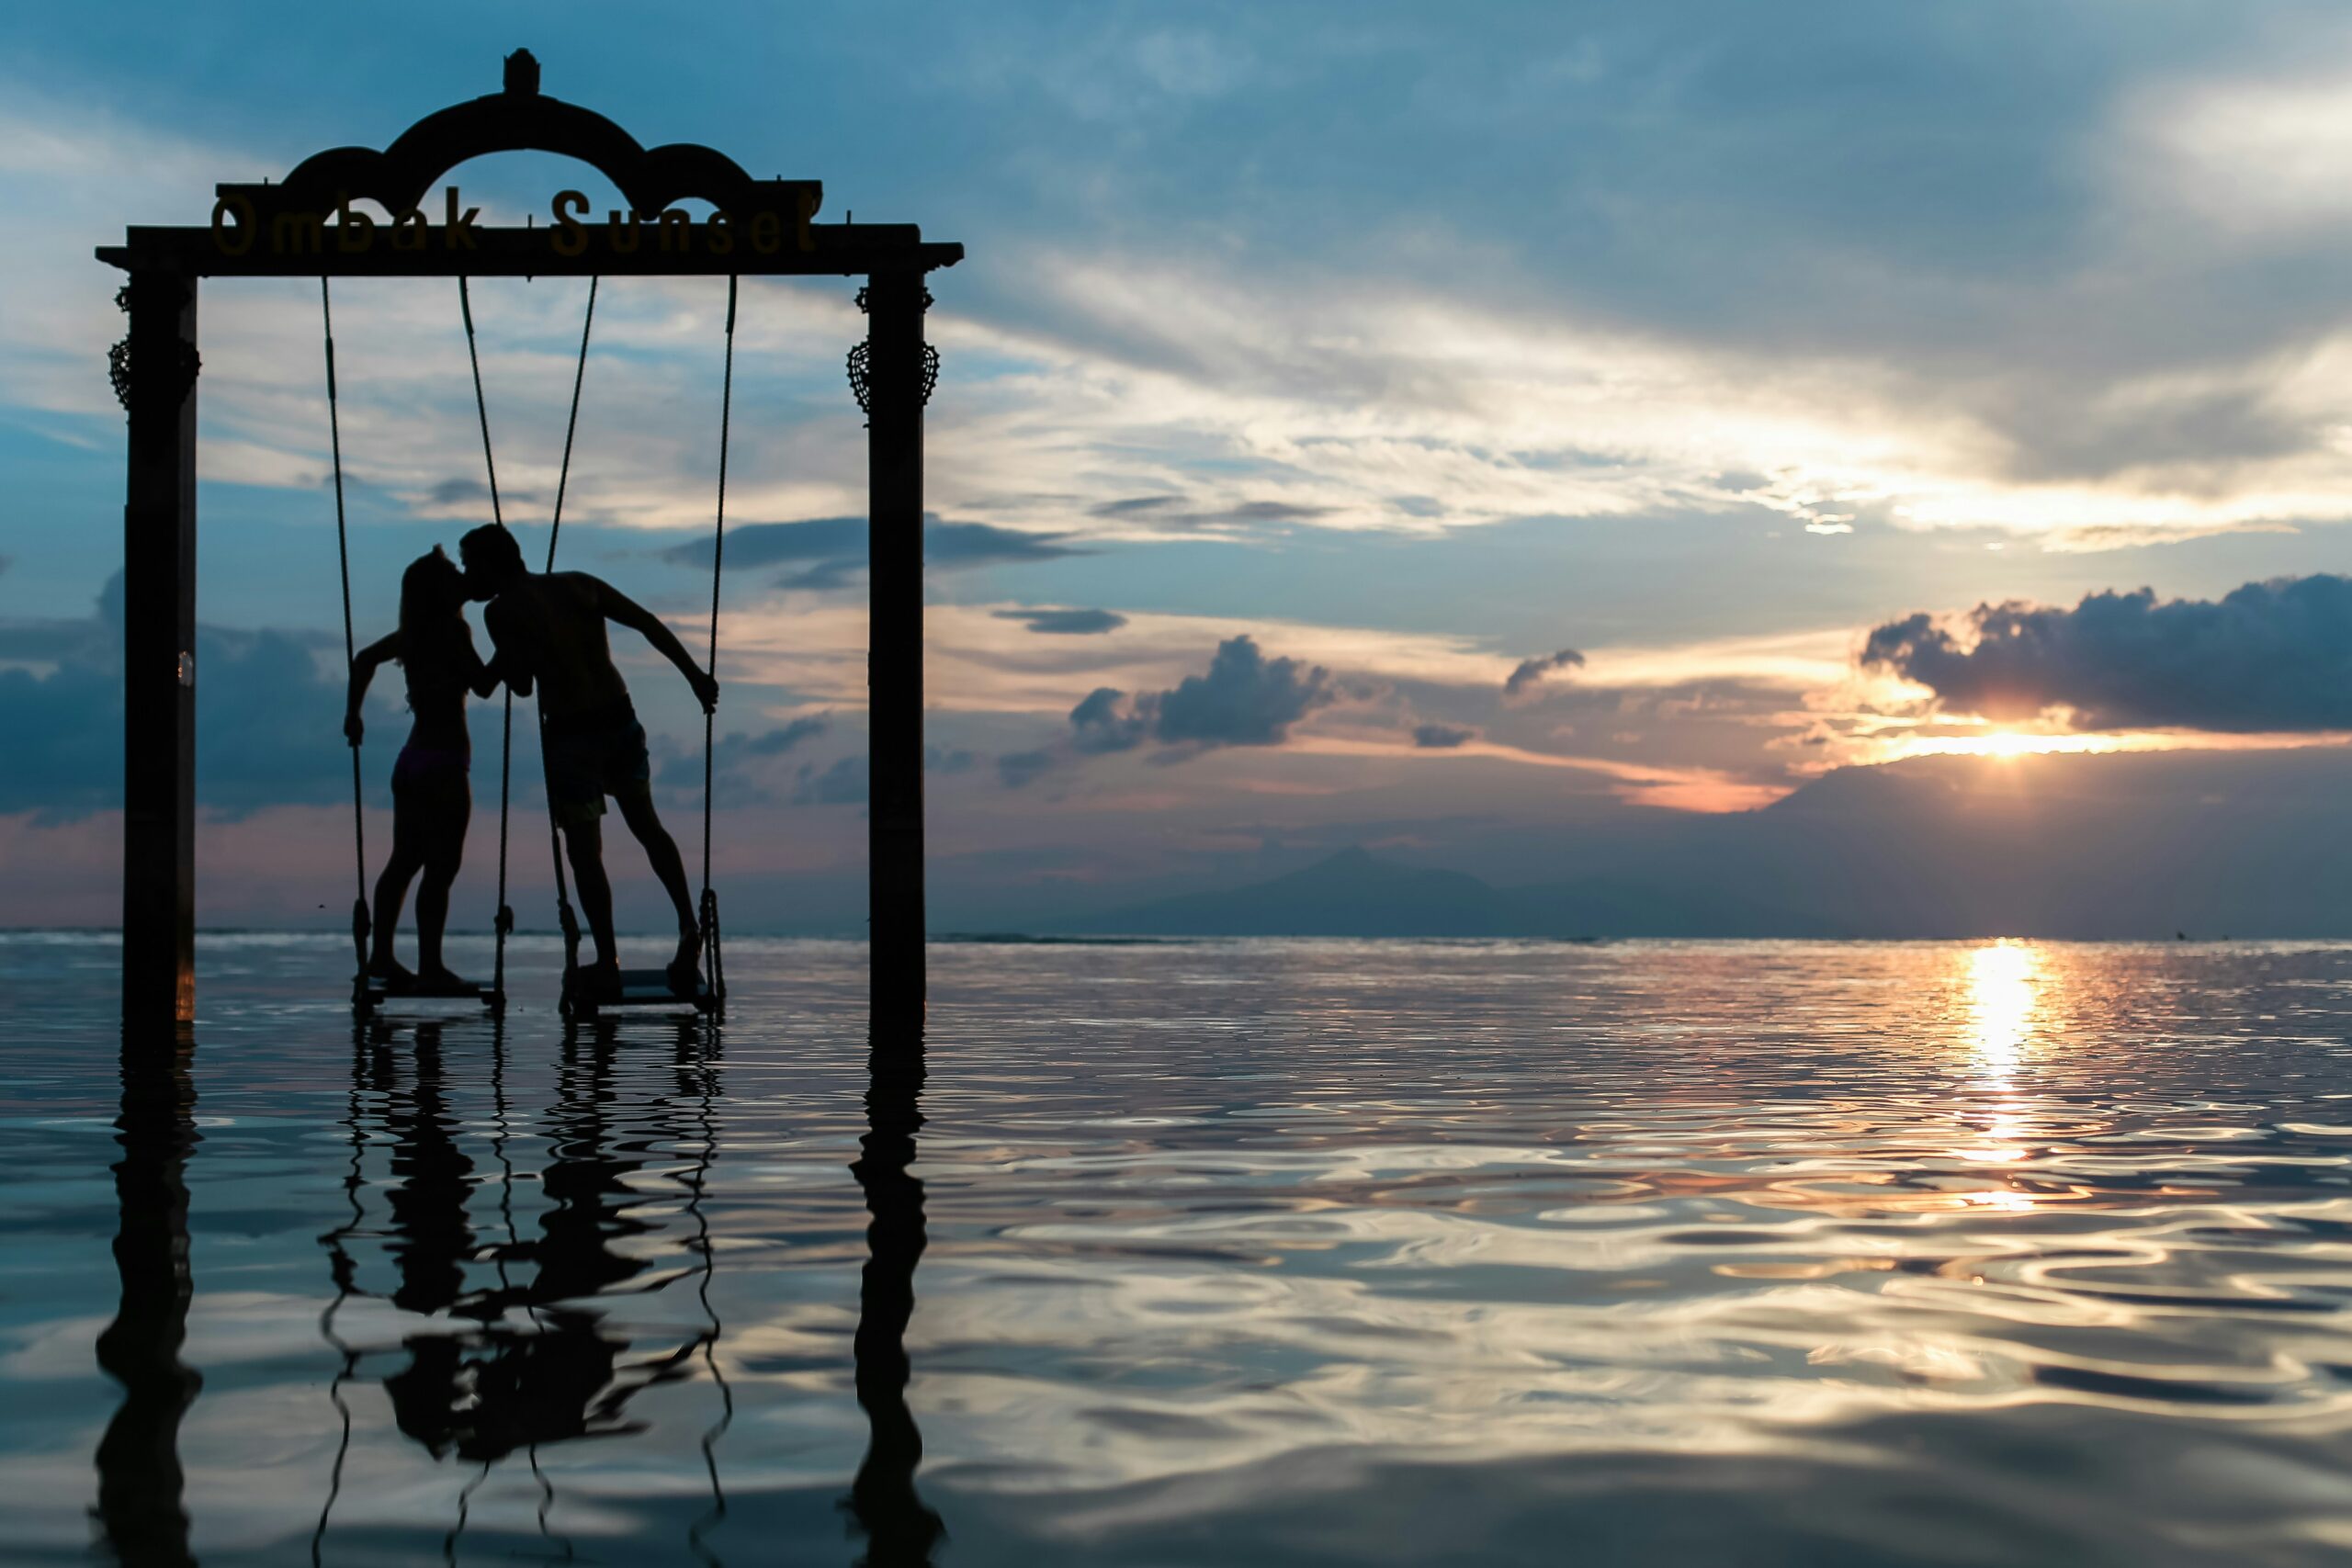 Partners Kissing on Swing in Ocean